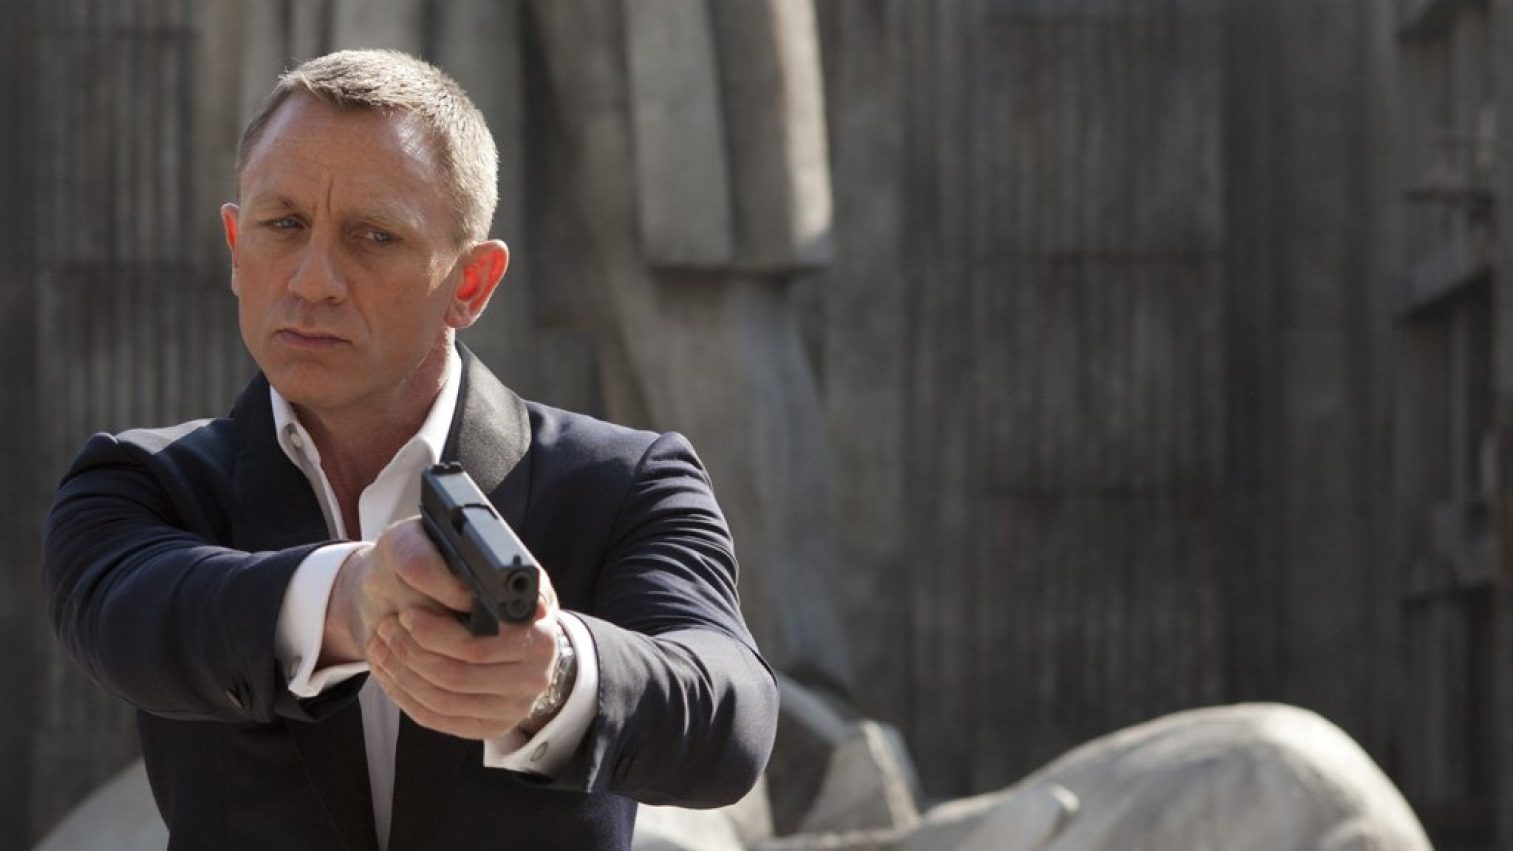 Skyfall Daniel Craig James Bond 007 Thriller Spy Action Film Movie Review 2015 Spectre Ralph Fiennes Javier Bardem Naomi Harris